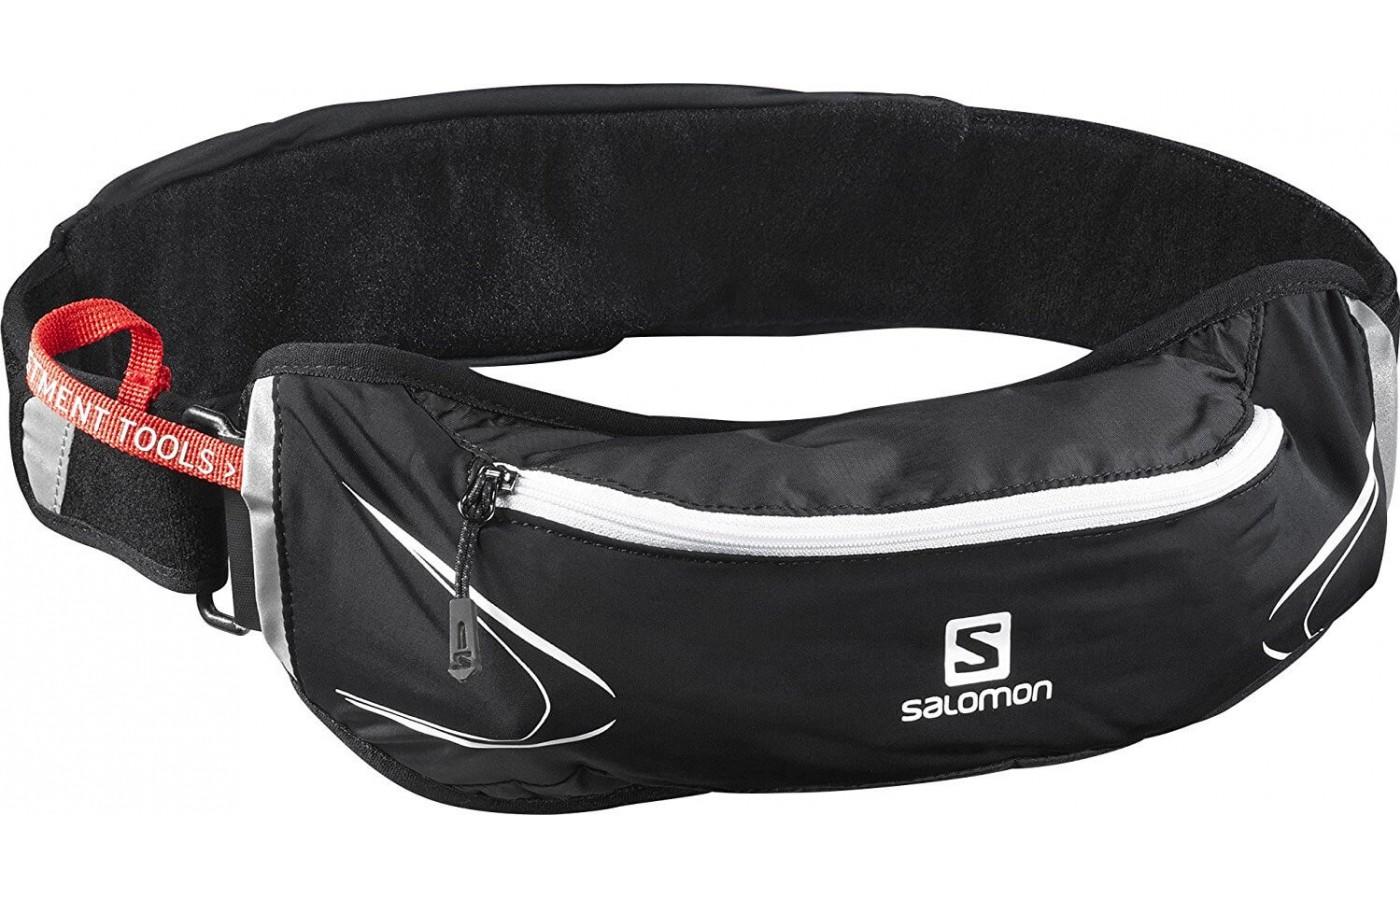 The Salomon Agile 500 Belt features Airvent Agility technology